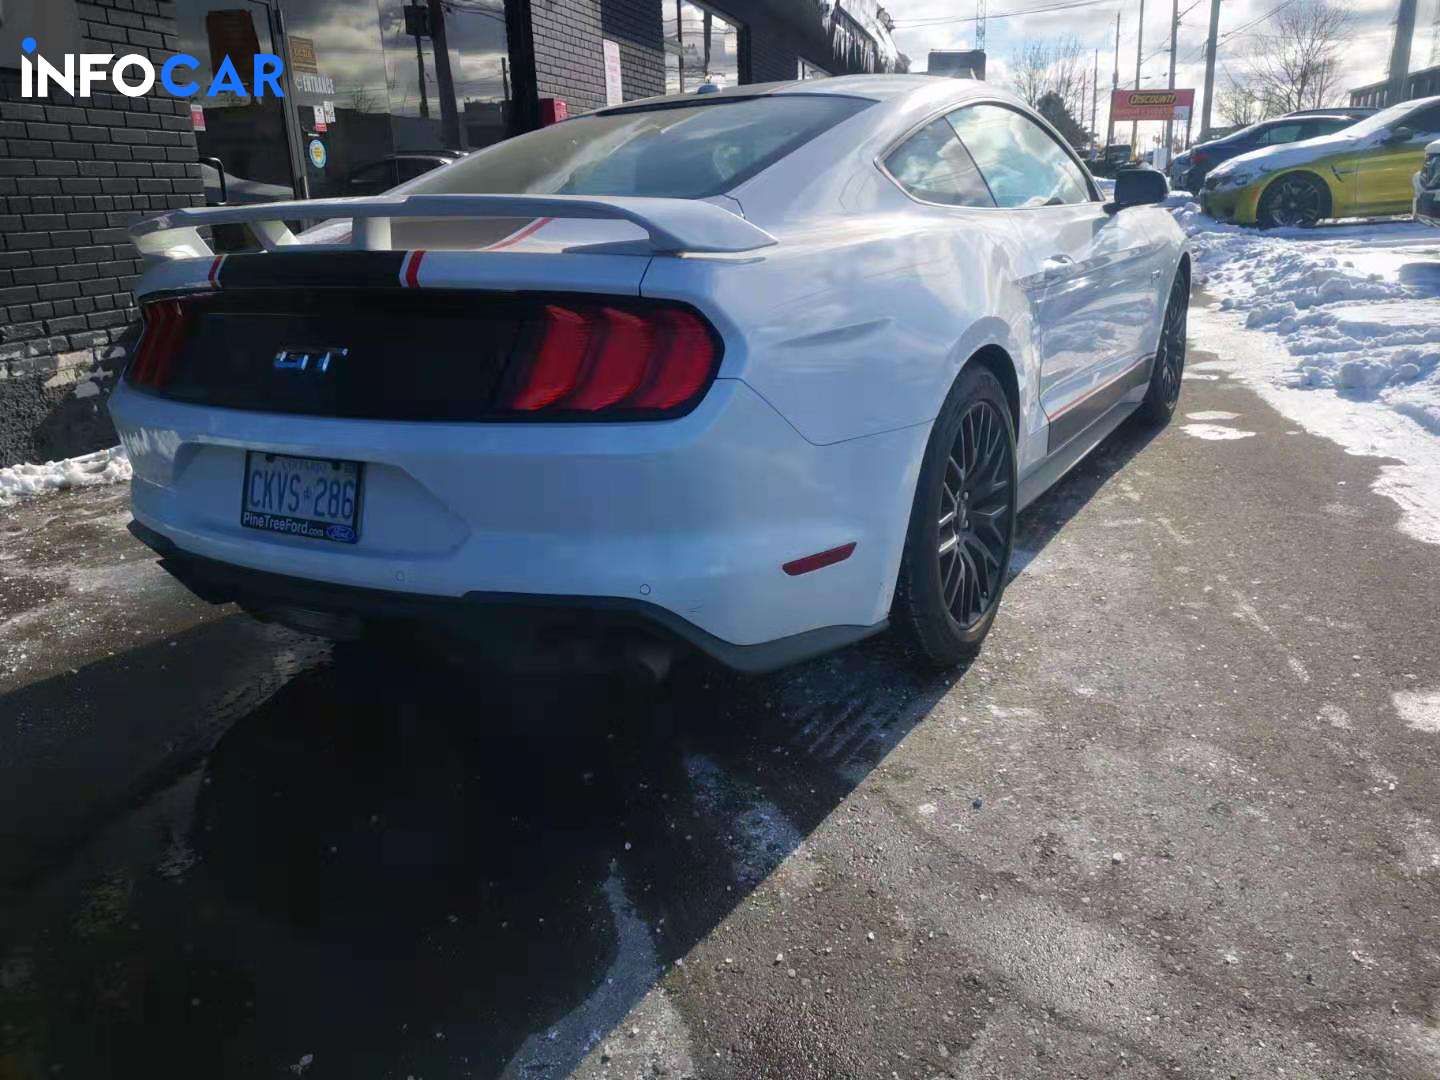 2019 Ford Mustang GT premium - INFOCAR - Toronto Auto Trading Platform